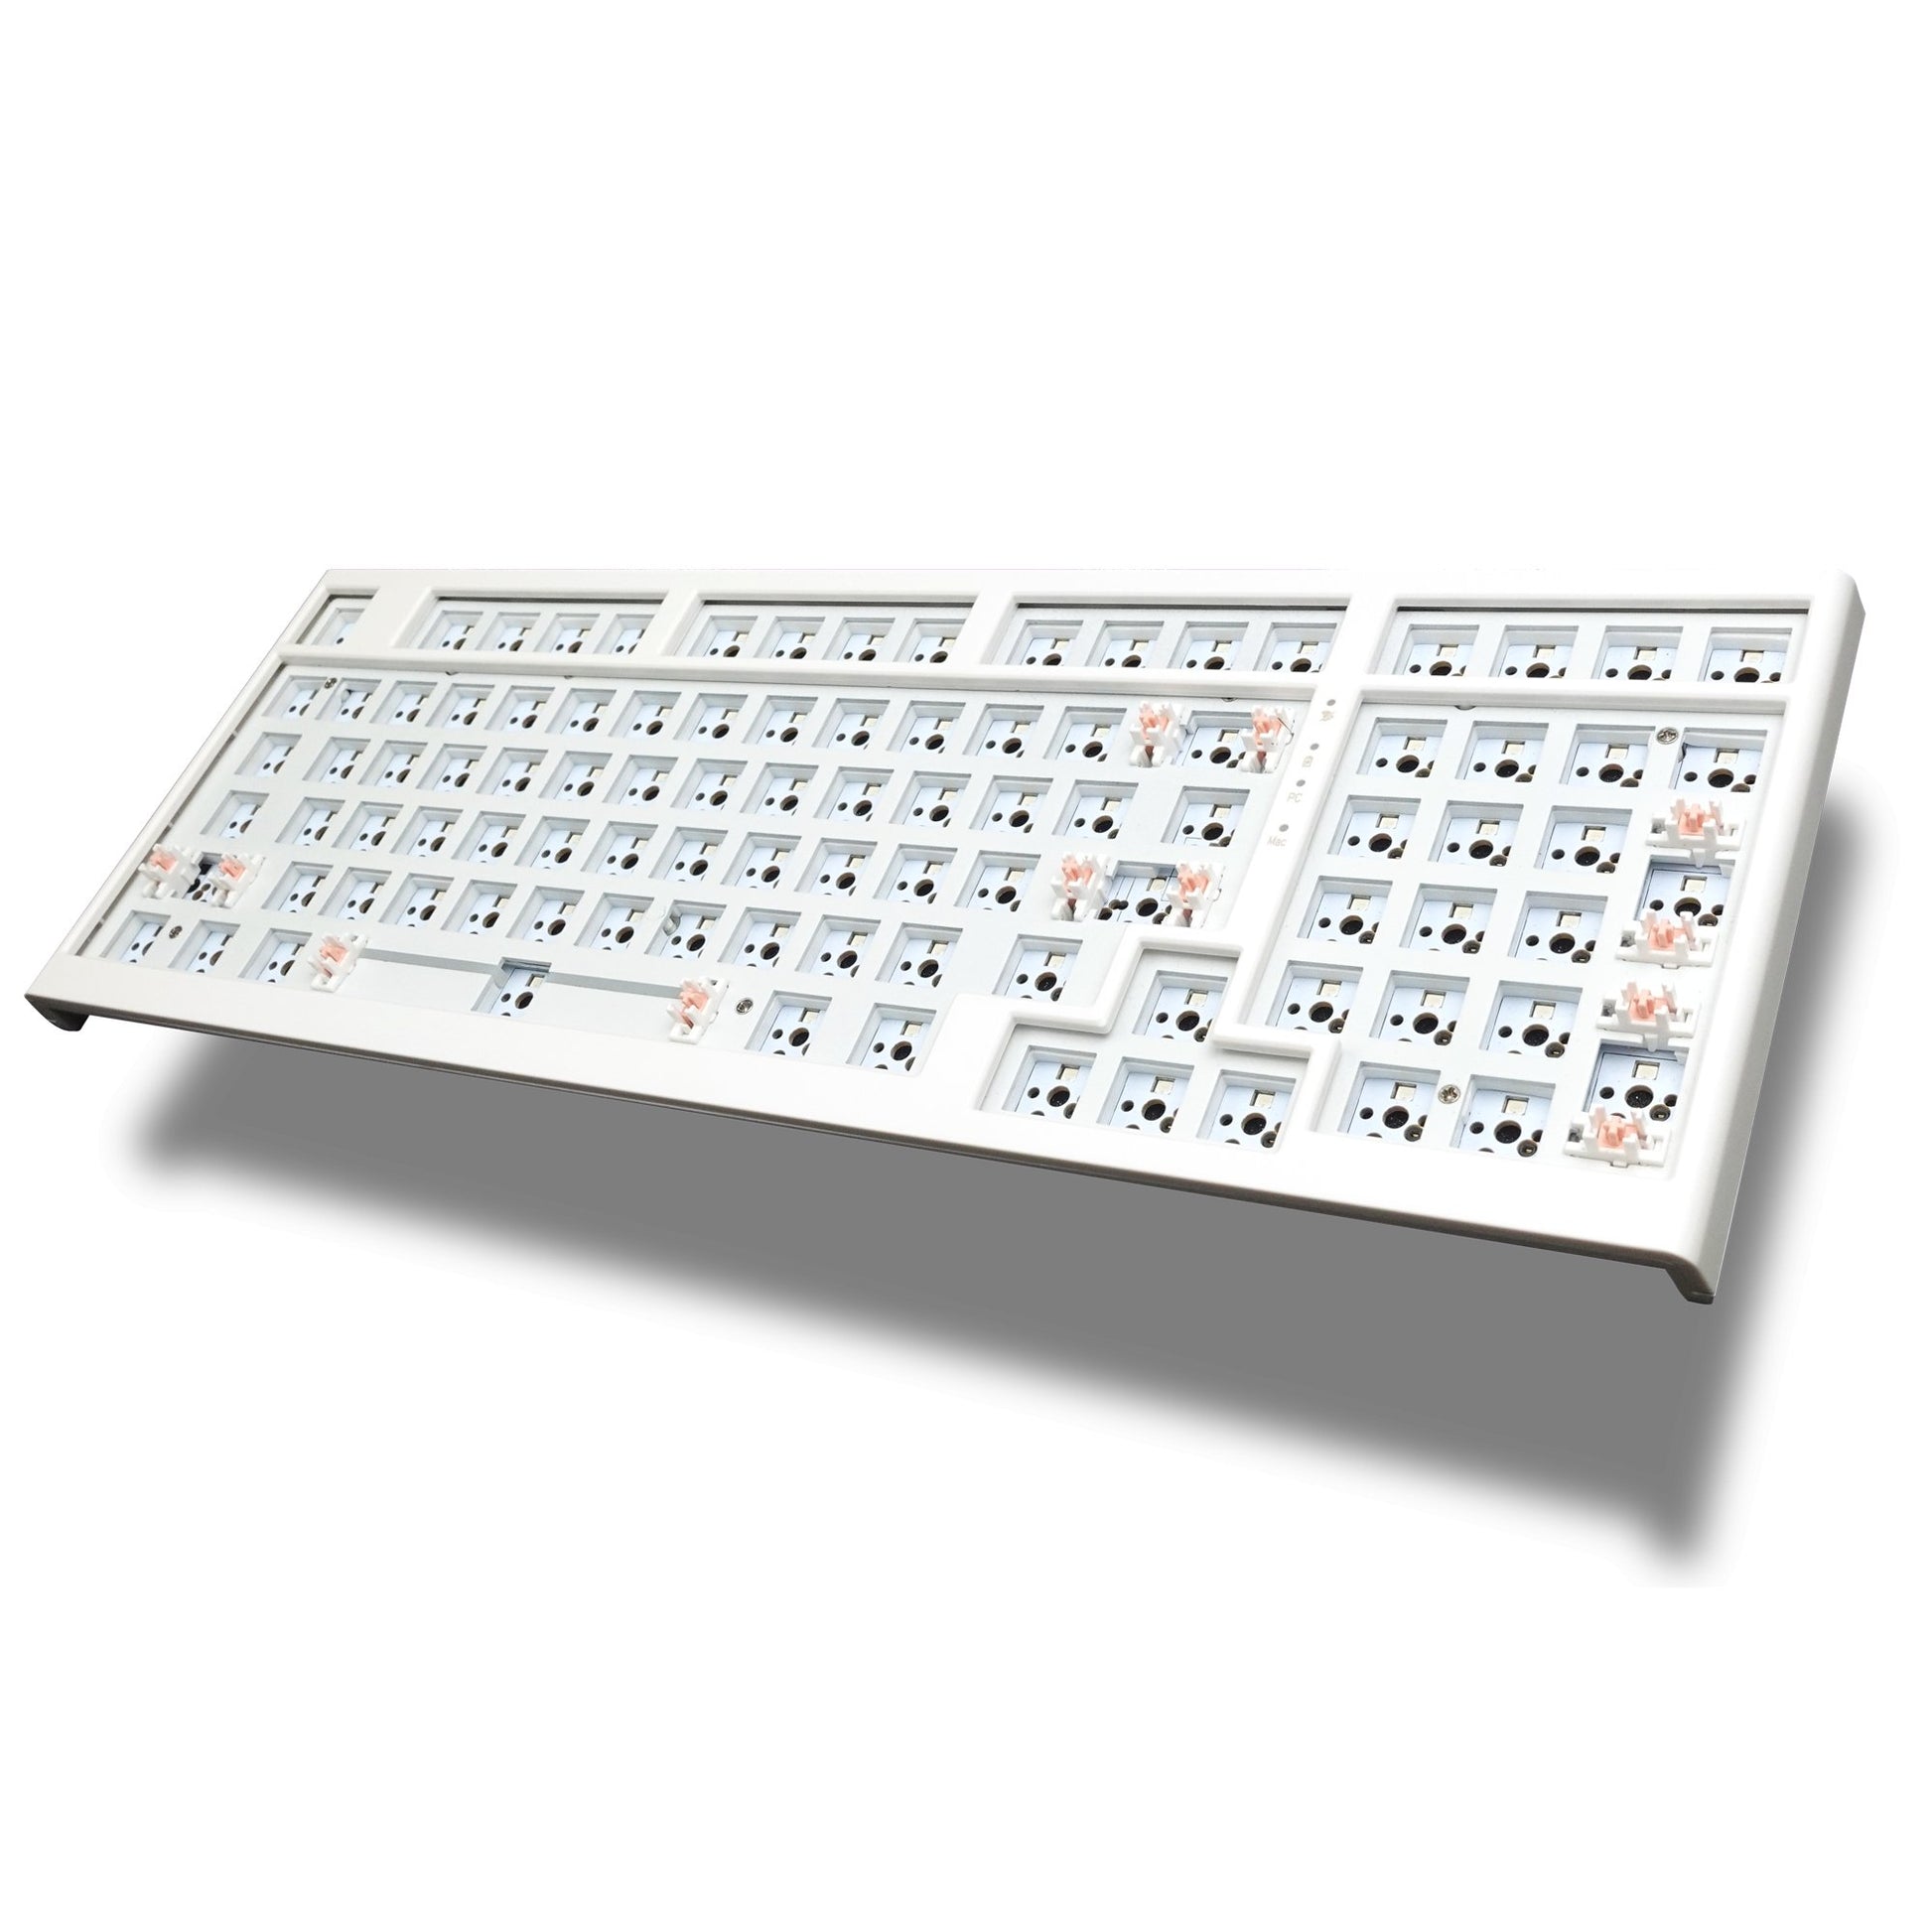 Alpha 87 - 80% TKL Wireless Mechanical Keyboard Barebone Kit